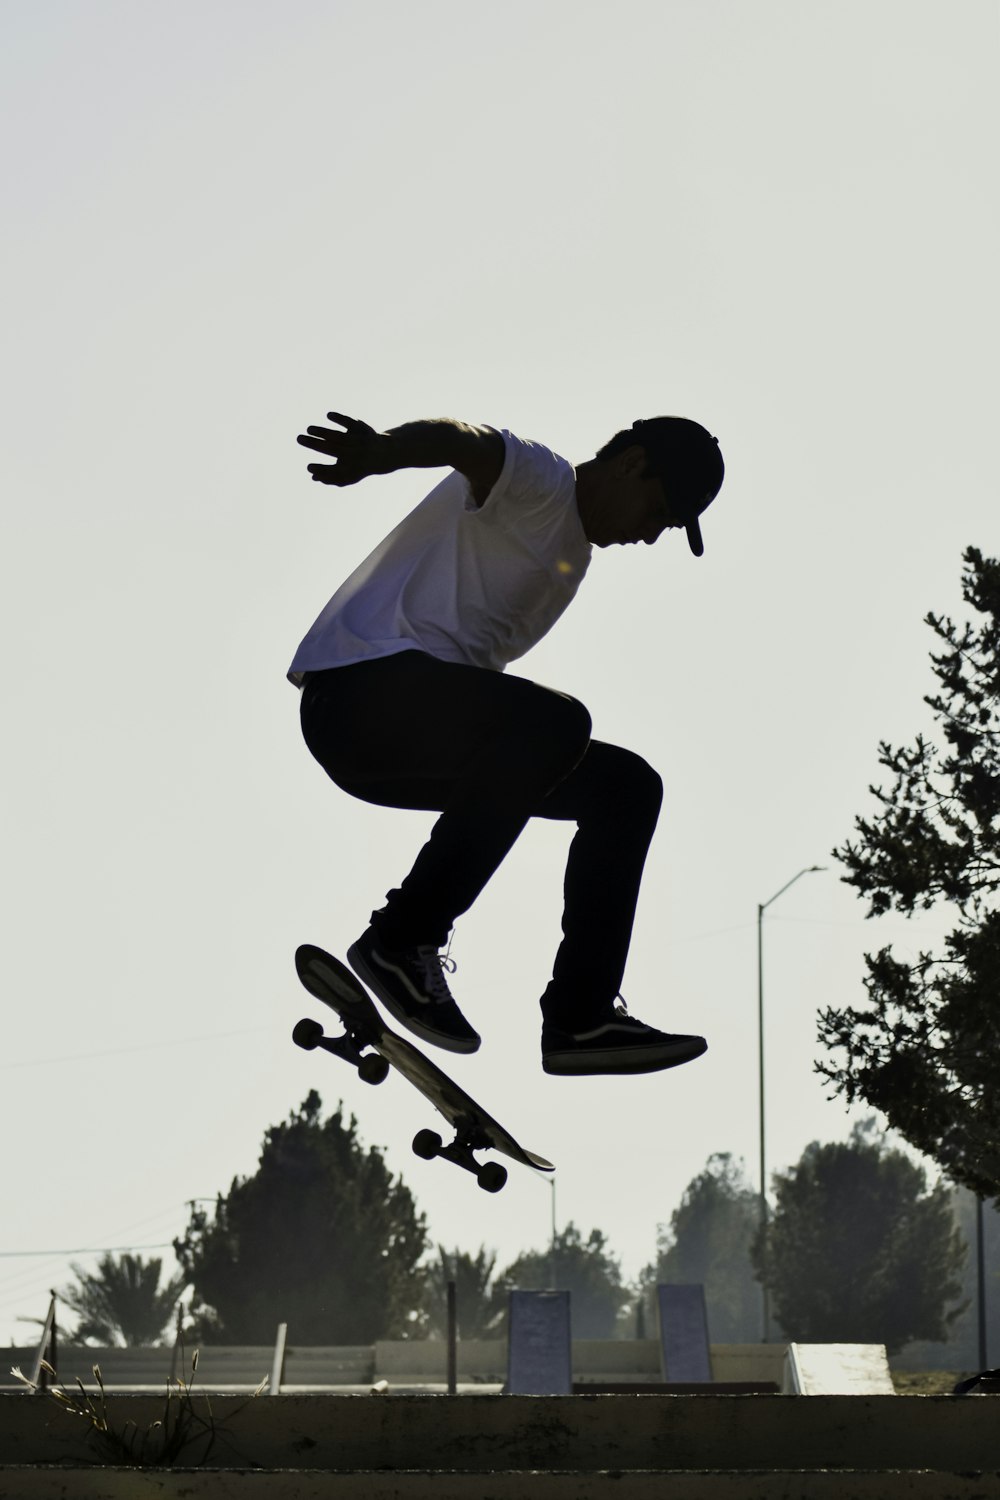 man in white shirt and blue pants doing skateboard stunts